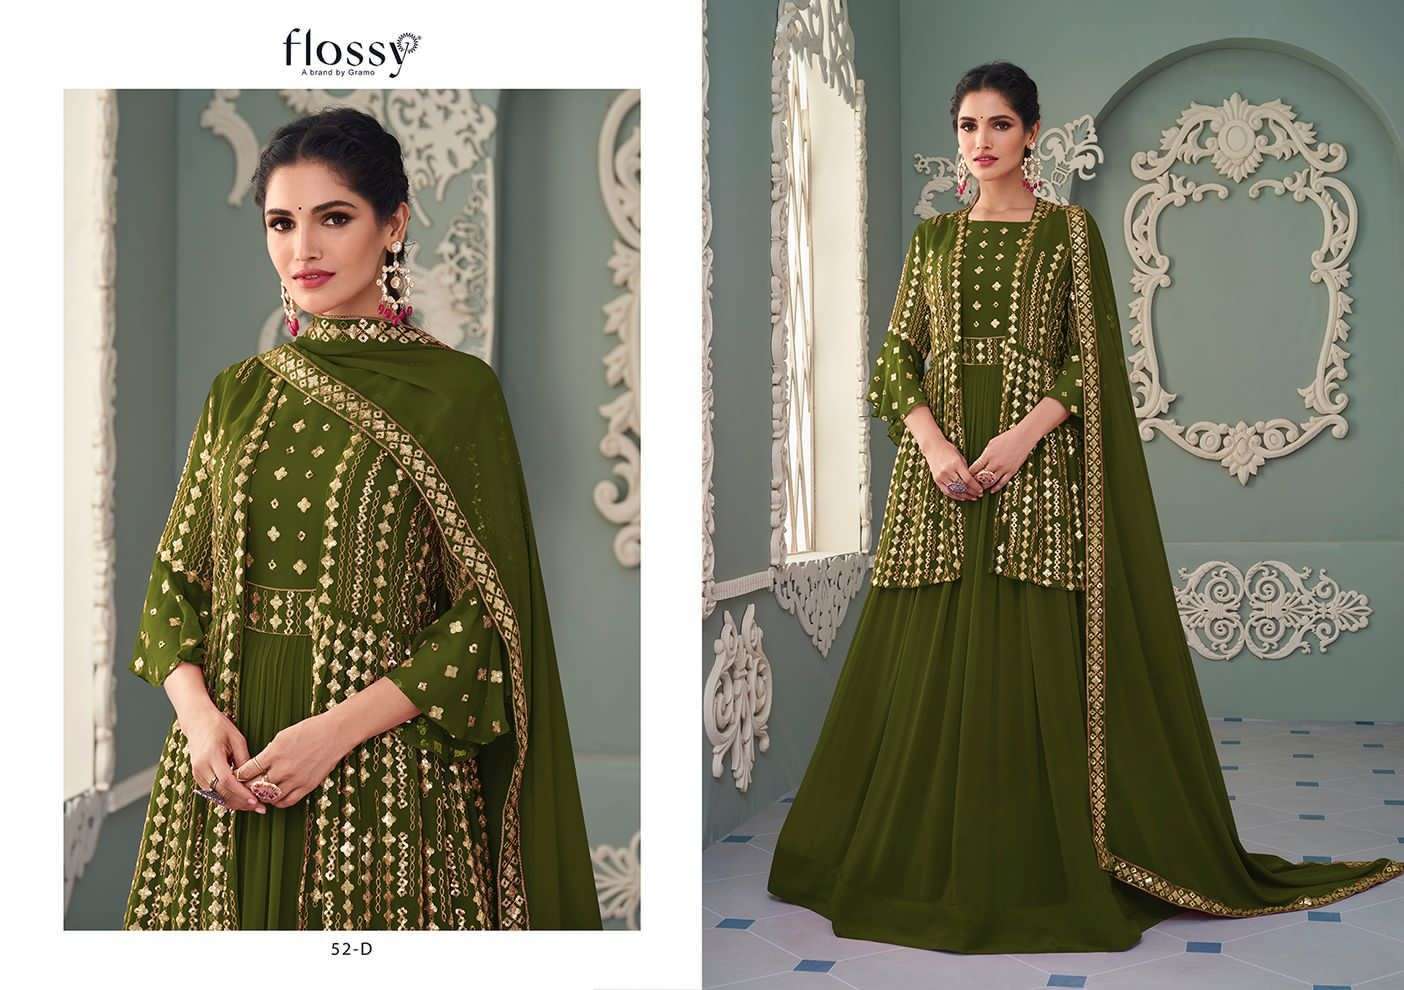 flossy naksh colour plus vol 2 georgette embroidered salwar kameez wholesale price surat